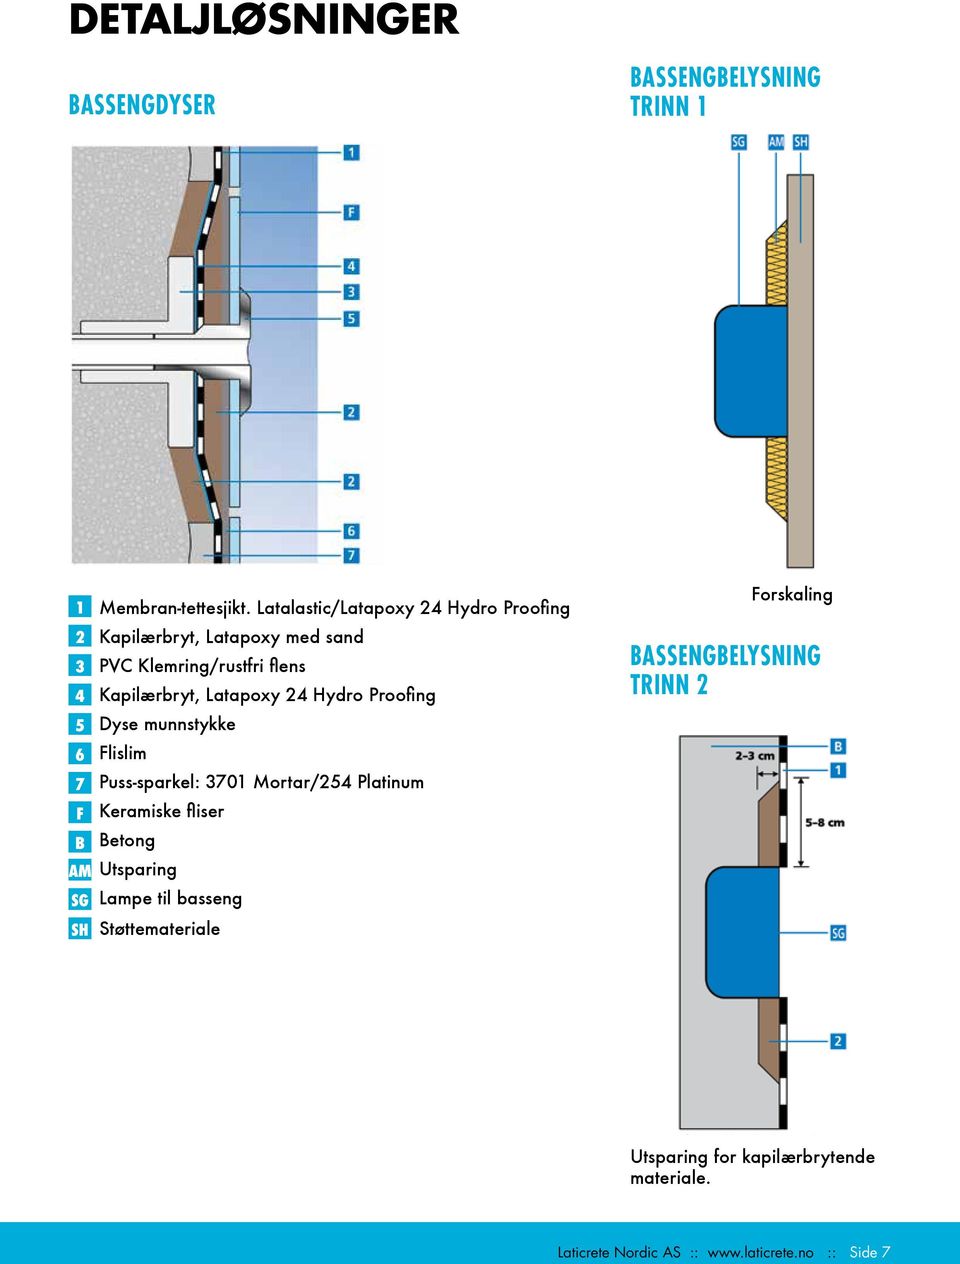 Hydro Proofing Dyse munnstykke Flislim Puss-sparkel: 3701 Mortar/254 Platinum Keramiske fliser Betong Utsparing Lampe til